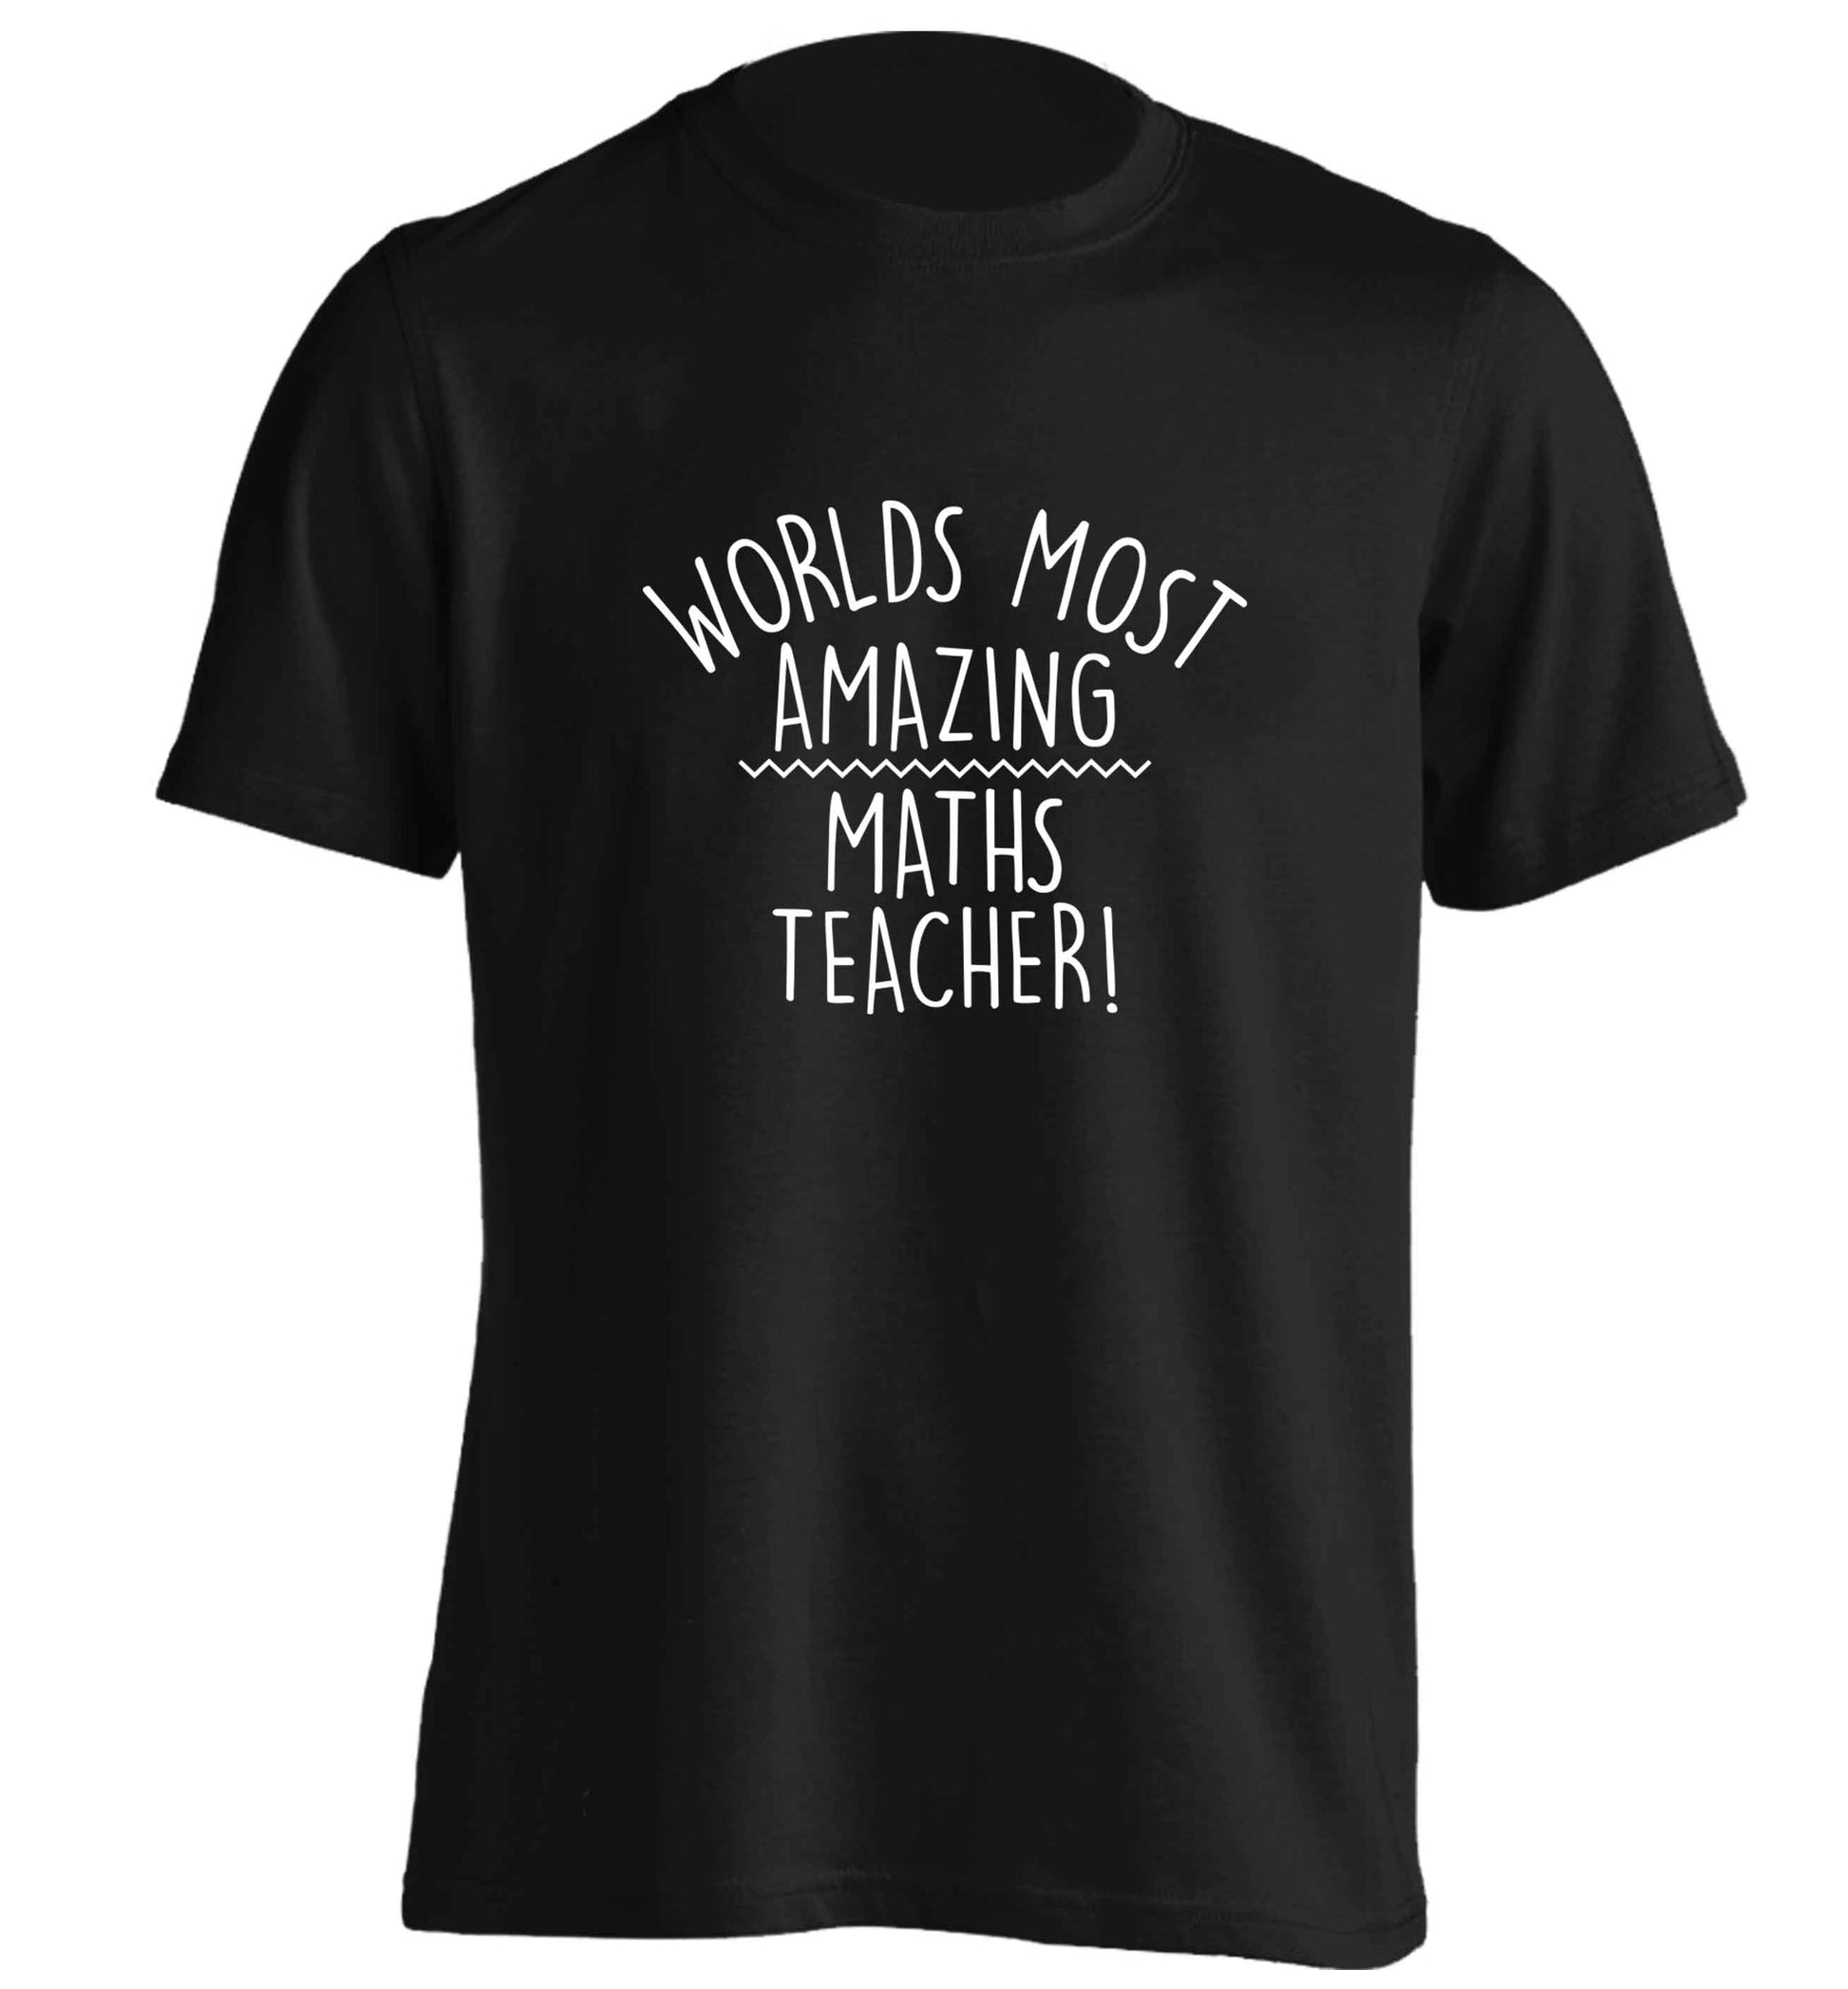 Worlds most amazing maths teacher adults unisex black Tshirt 2XL